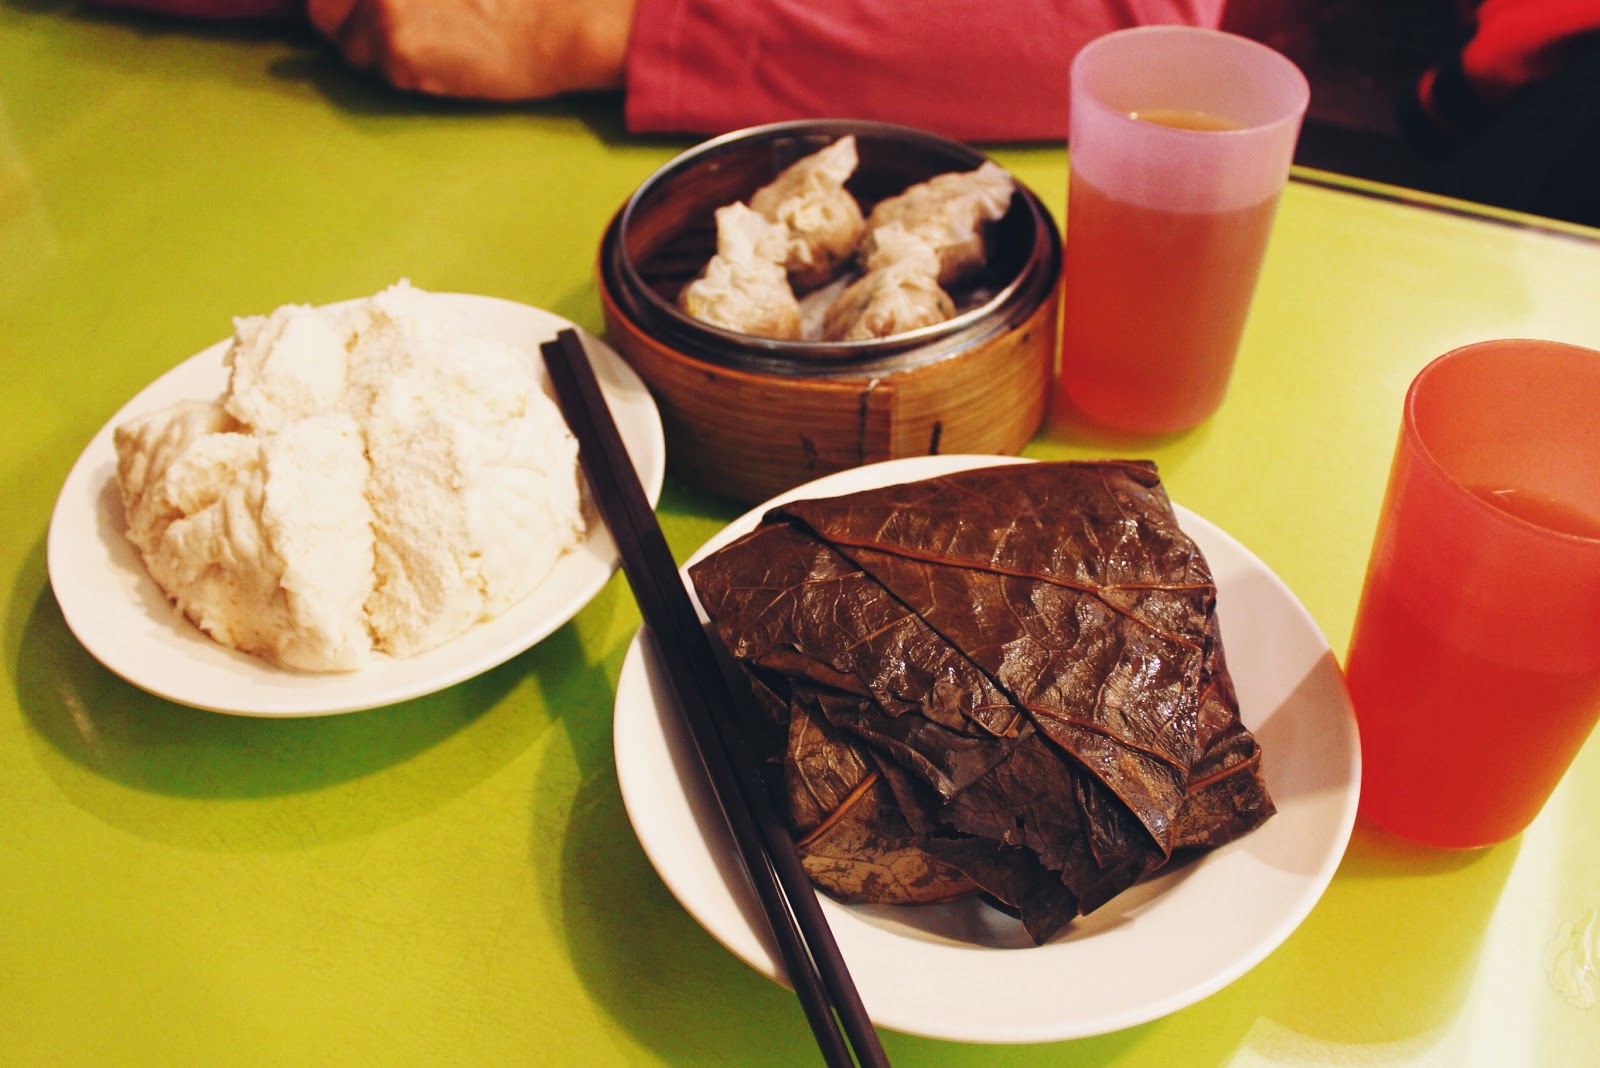 港式點心, 富麗餐廳 Fu Li Restaurant @ 香港元朗 Yuen Long, Hong Kong